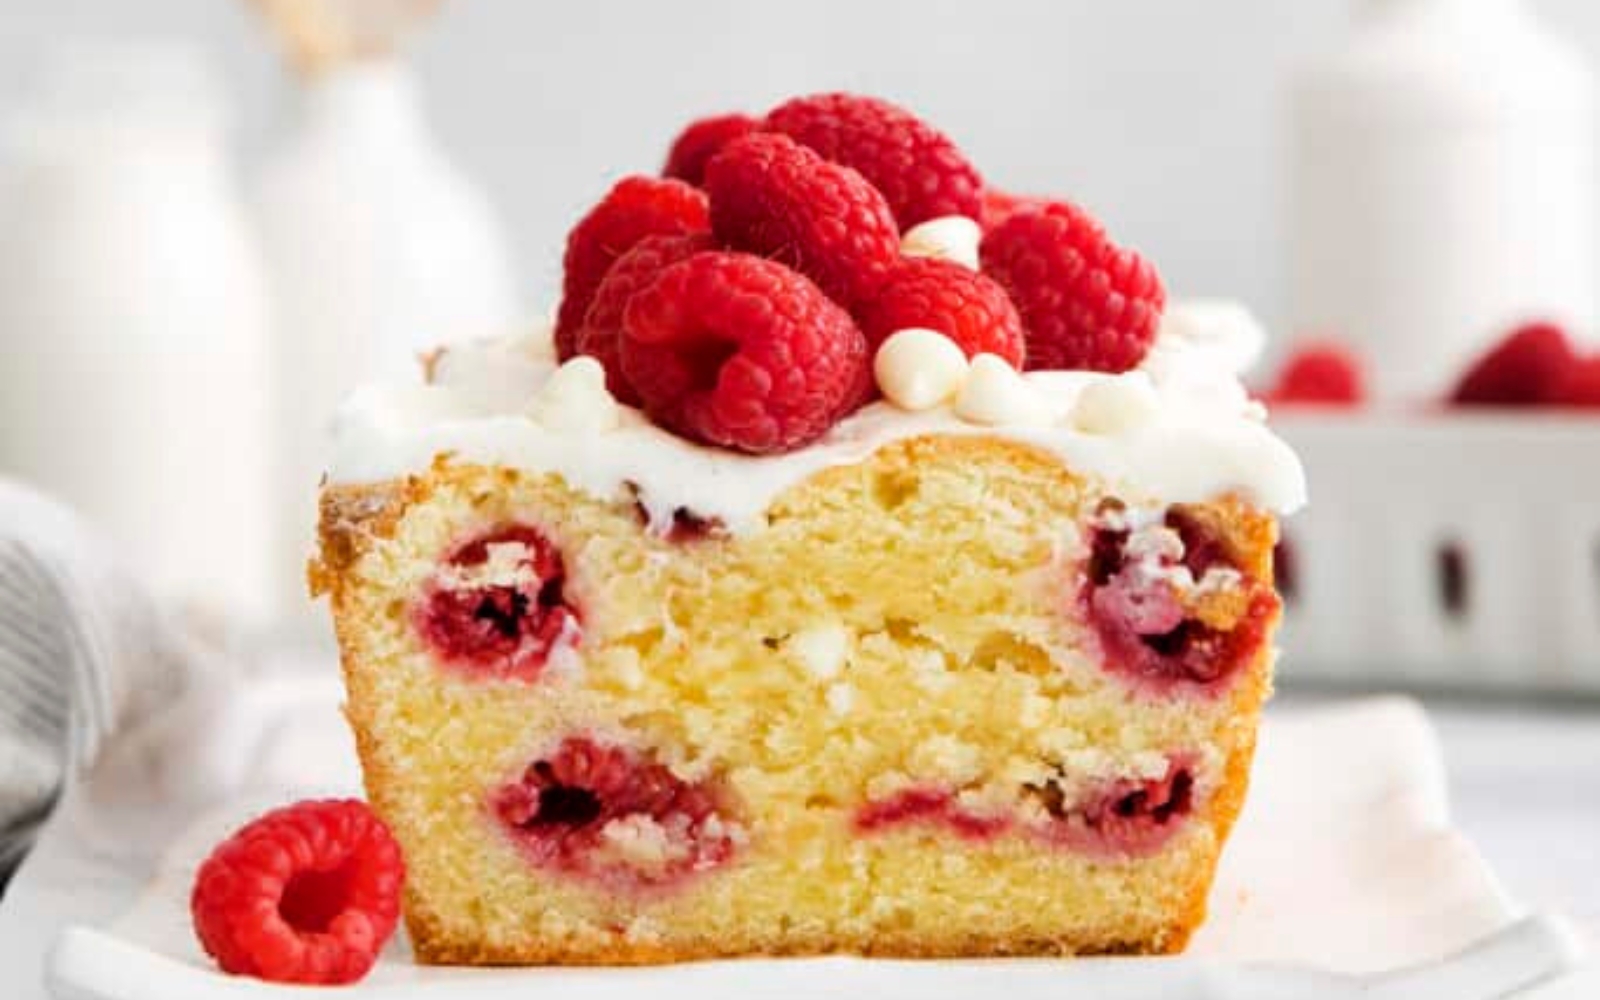 a white chocolate and raspberry loaf cake